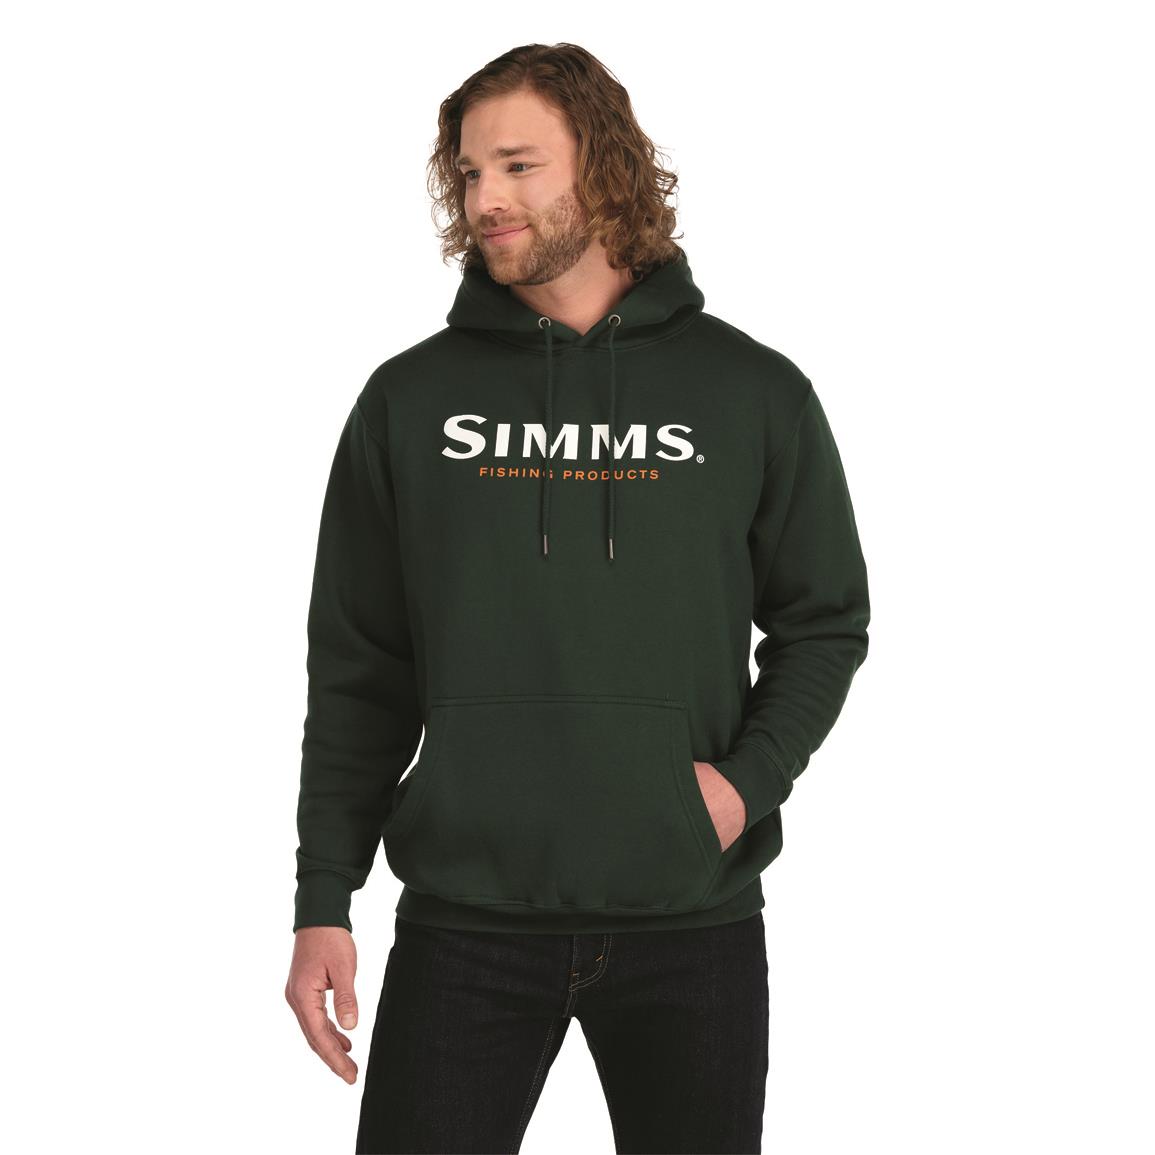 Simms Men's Logo Hoodie, Forest